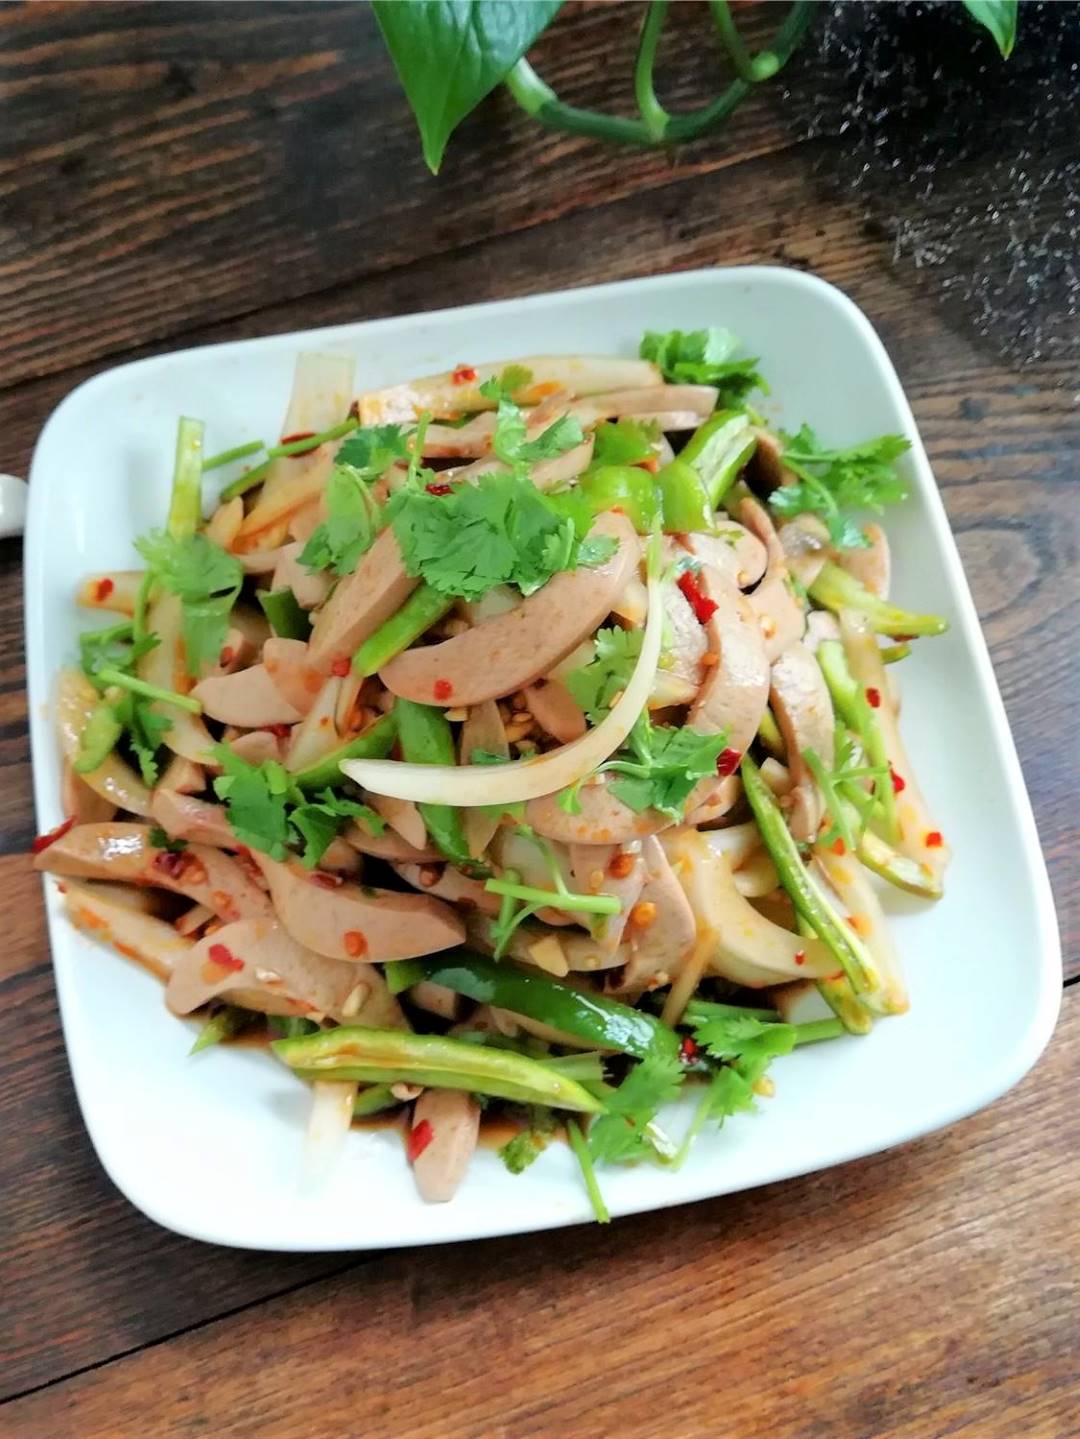 Pig kidney salad recipe china cold dish 2021